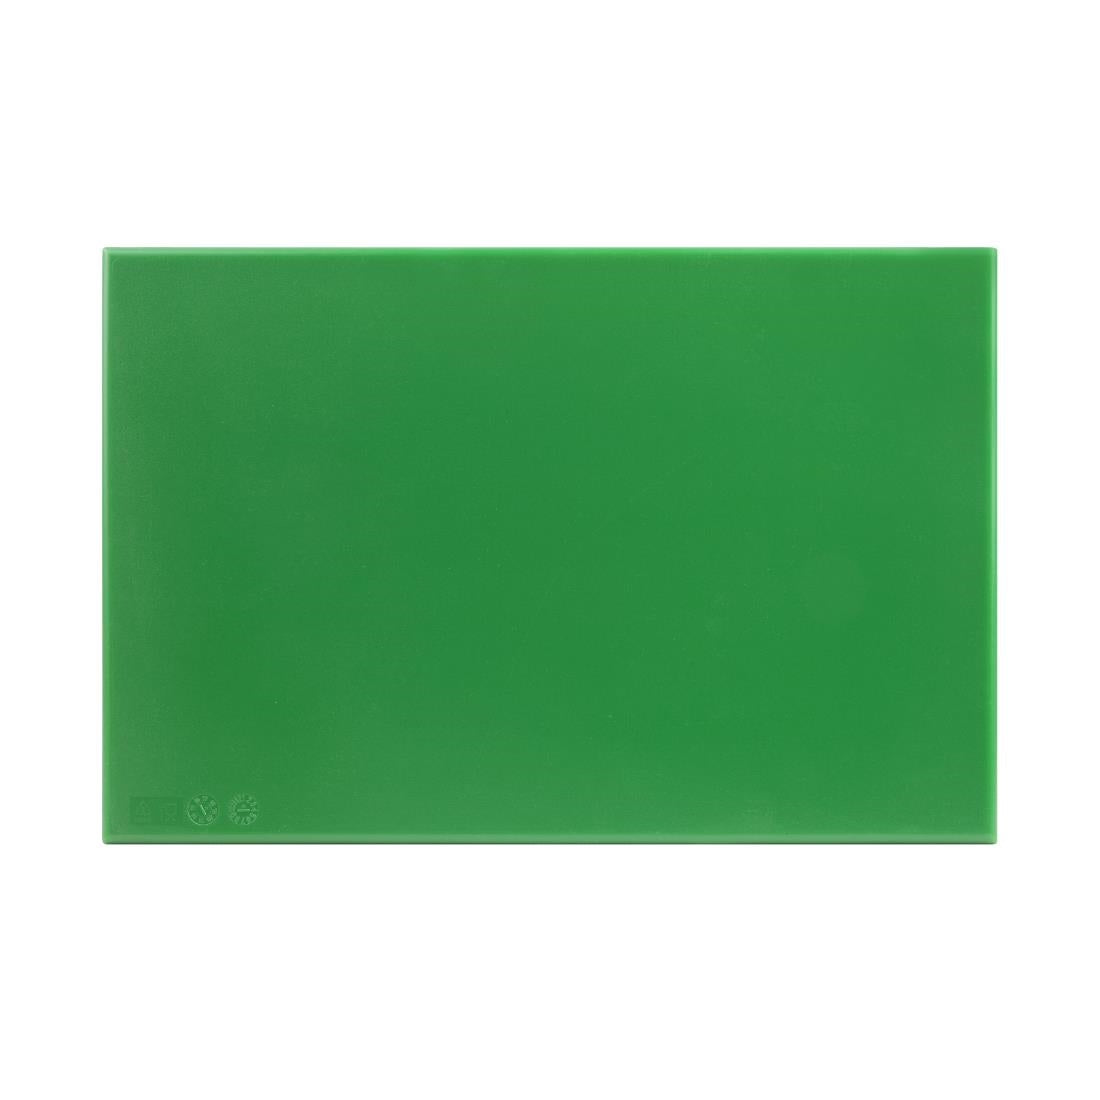 EDLP - Hygiplas Anti-bacterial High Density Chopping Board Green - 18x12x1/2"